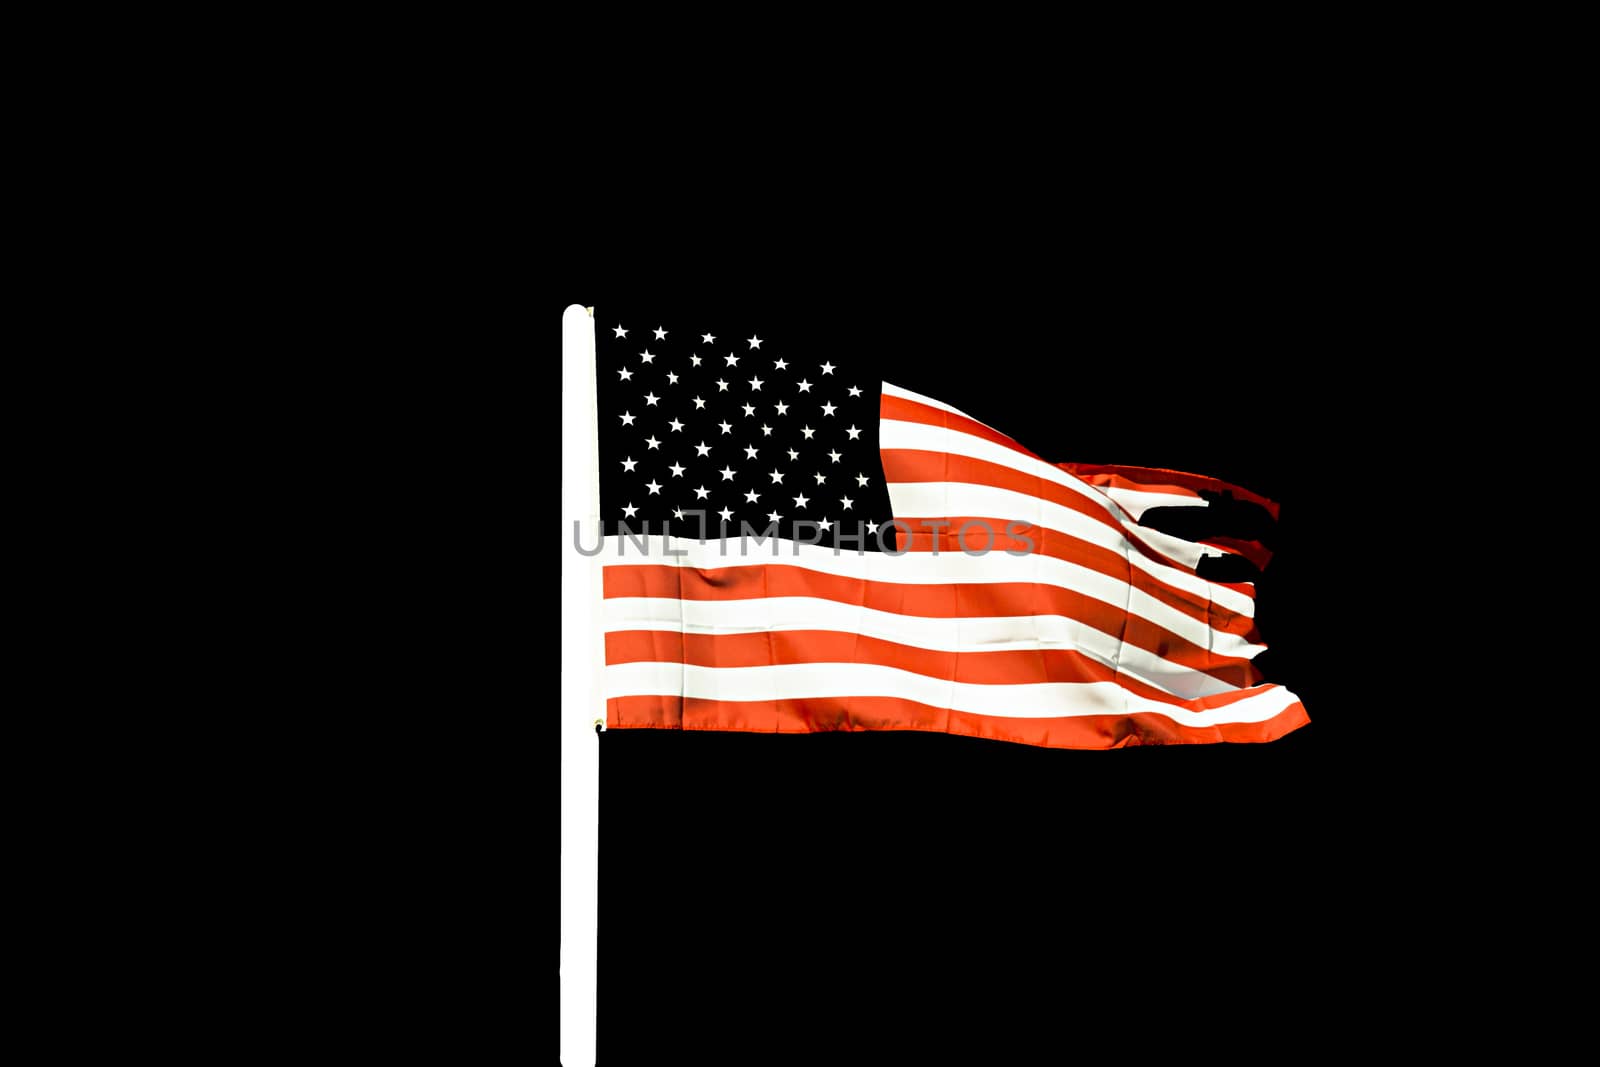 Billowing usa flag against black horizontal background